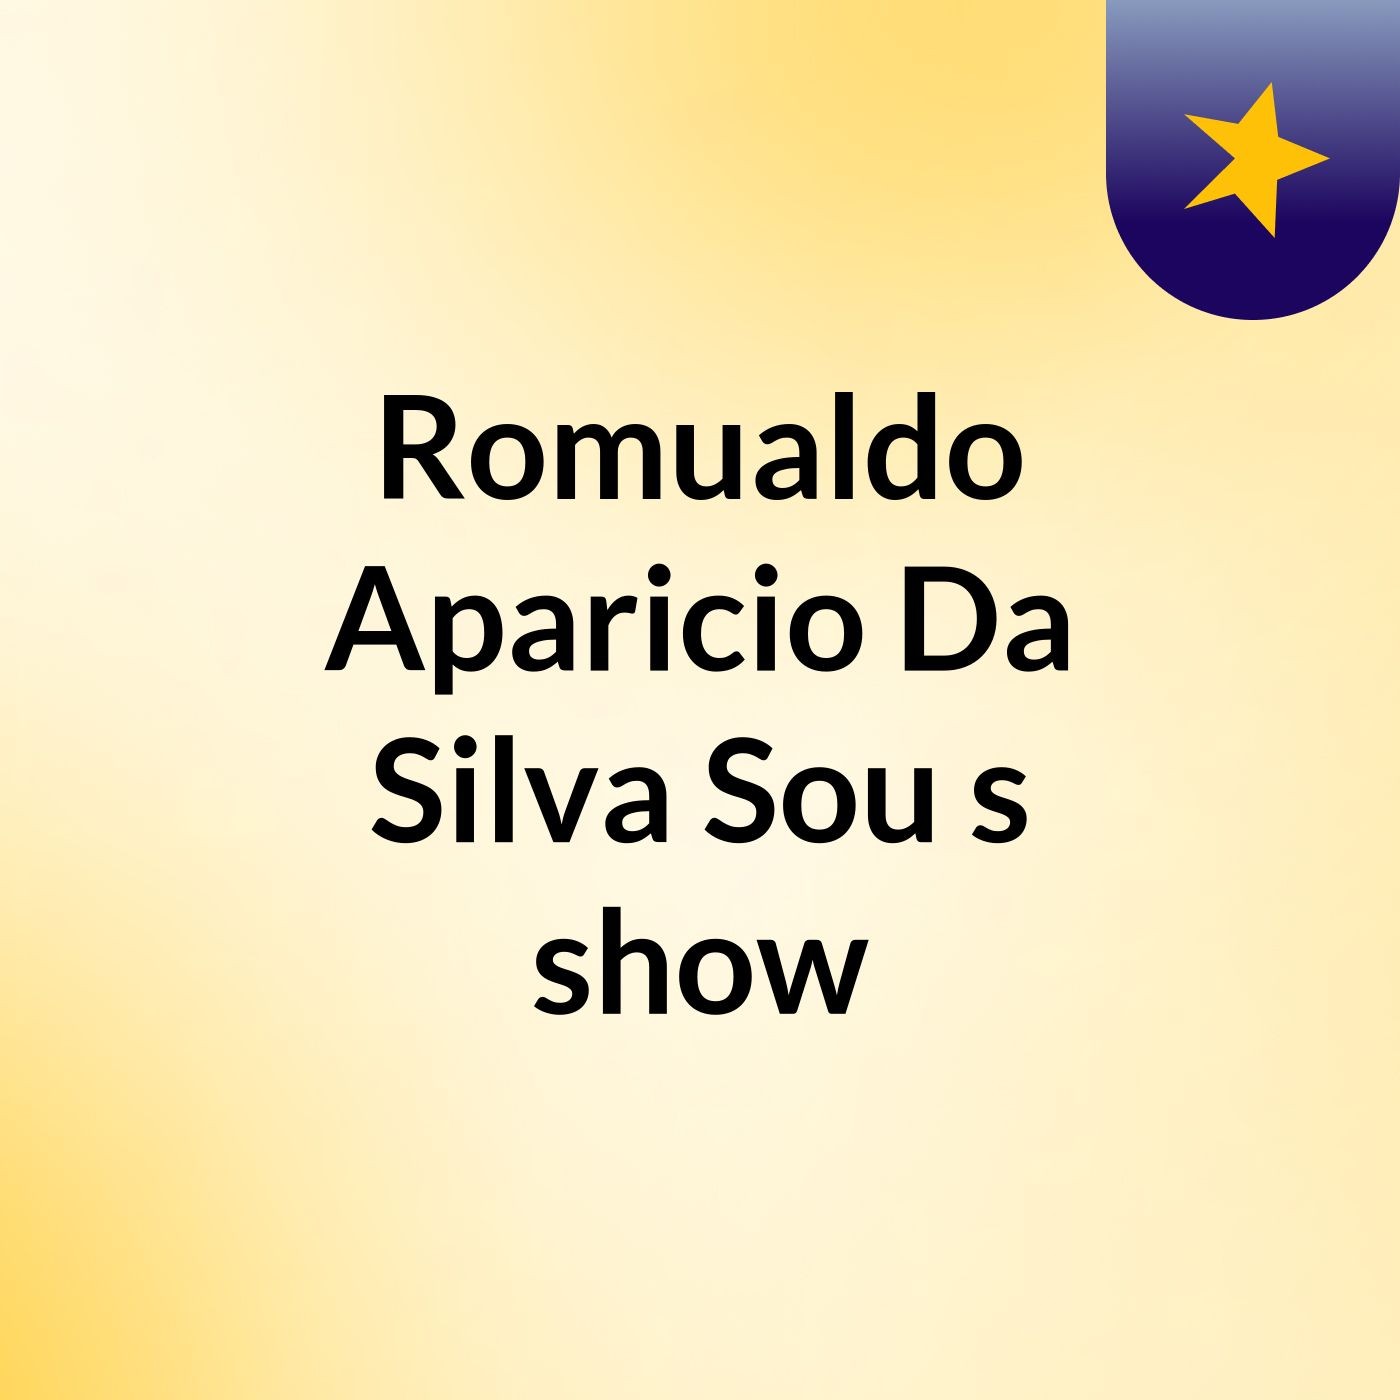 Romualdo Aparicio Da Silva Sou's show